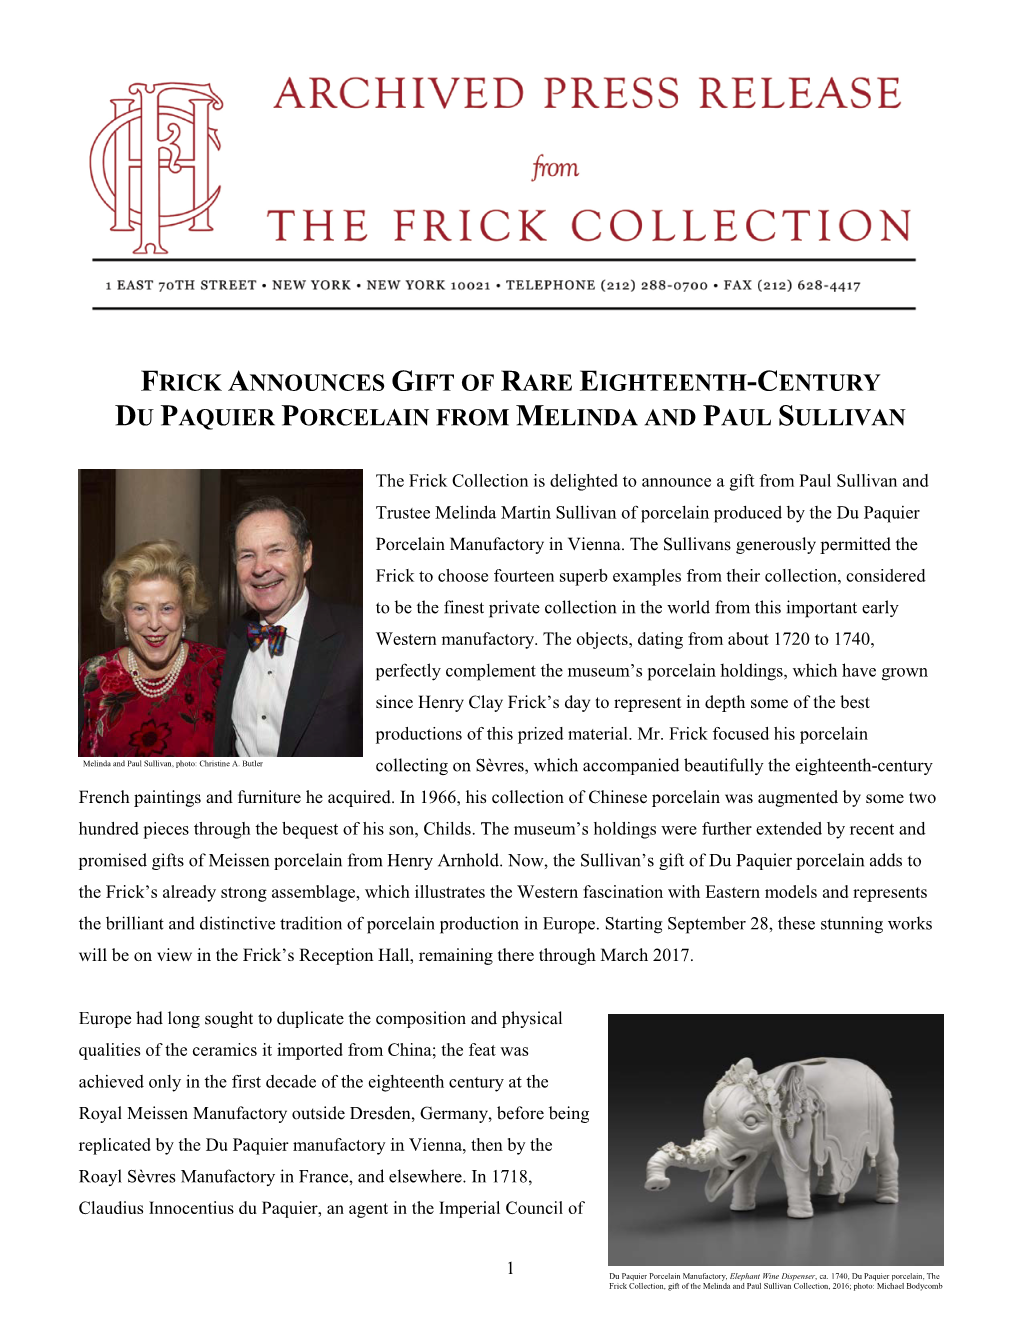 Frick Announces Gift of Rare Eighteenth-Century Du Paquier Porcelain from Melinda and Paul Sullivan